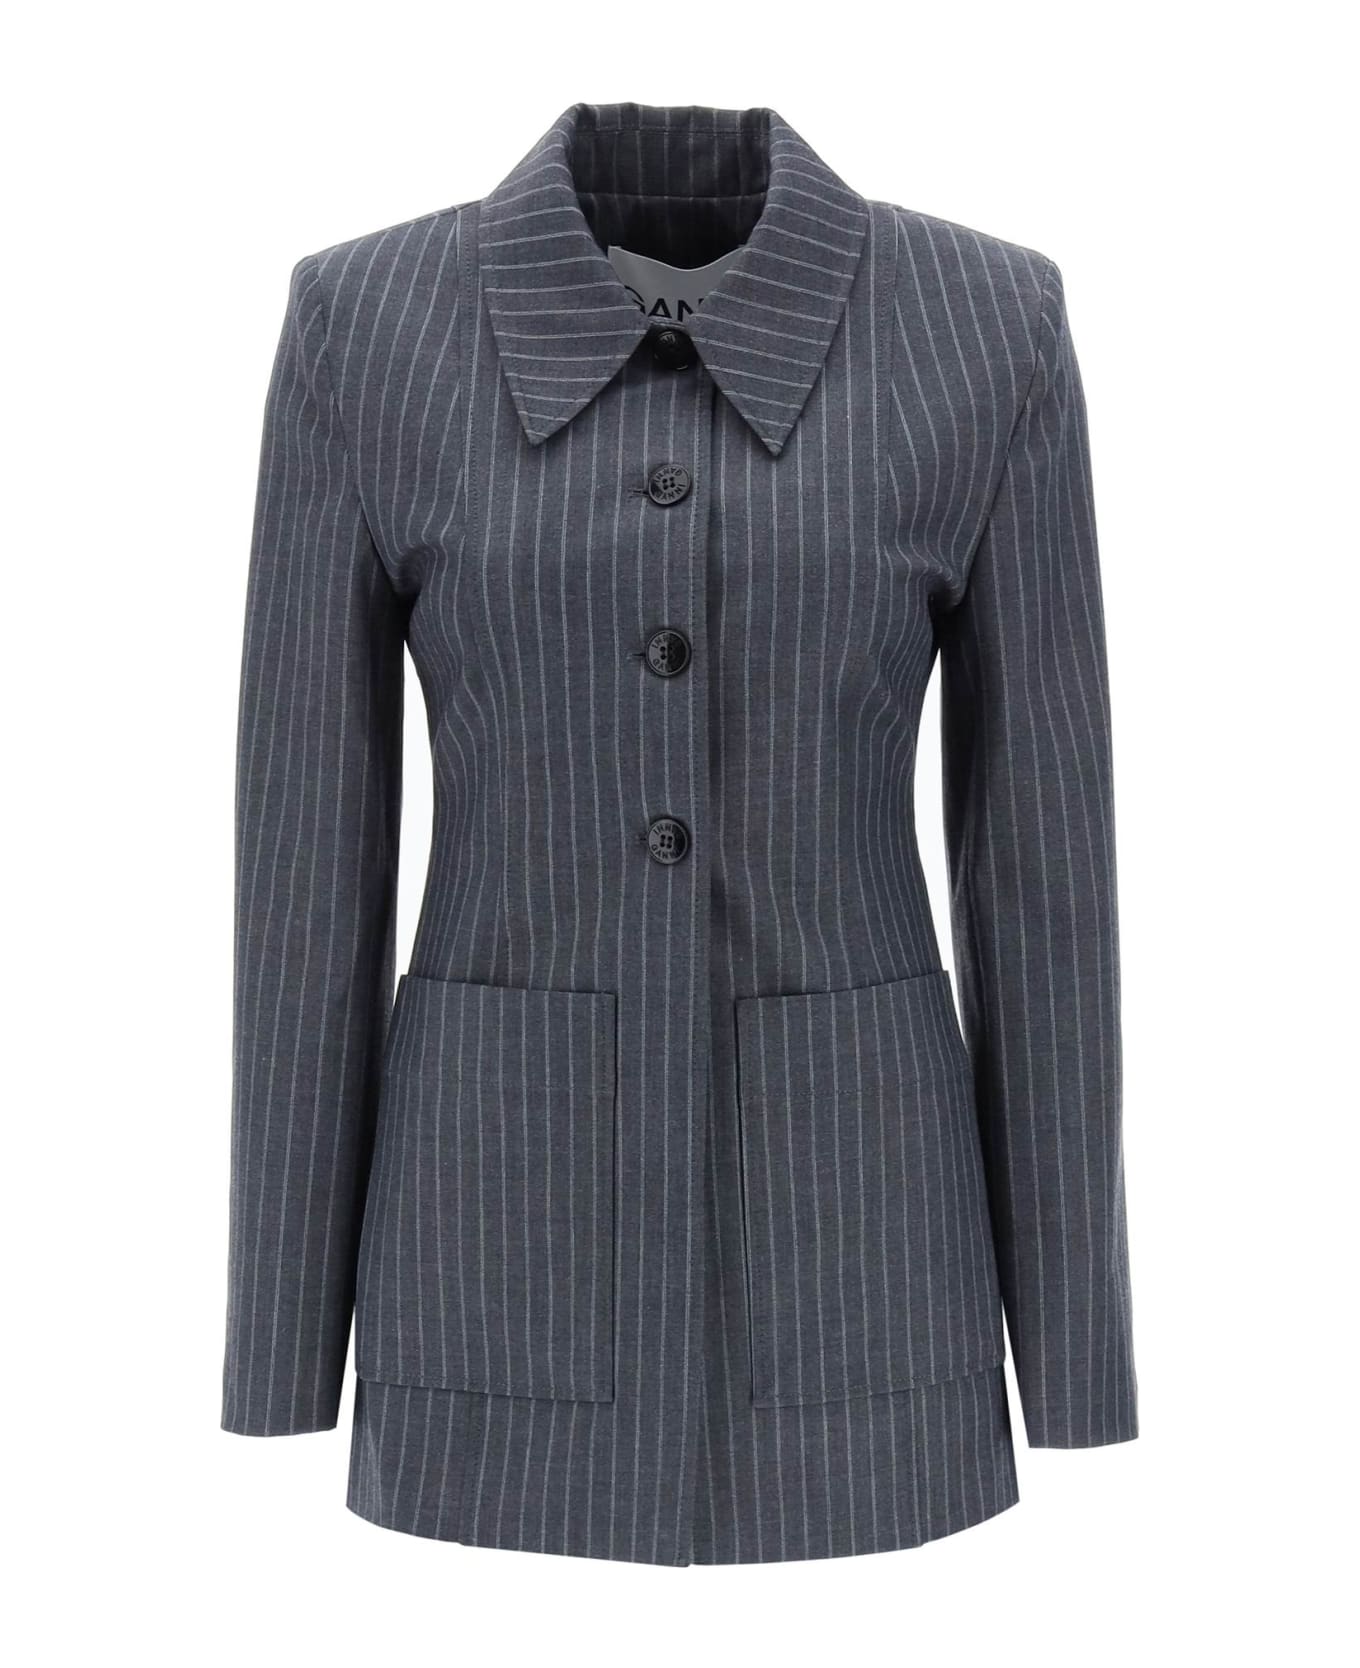 Ganni Jacket With Stripe Pattern - GRAY PINSTRIPE (Grey)